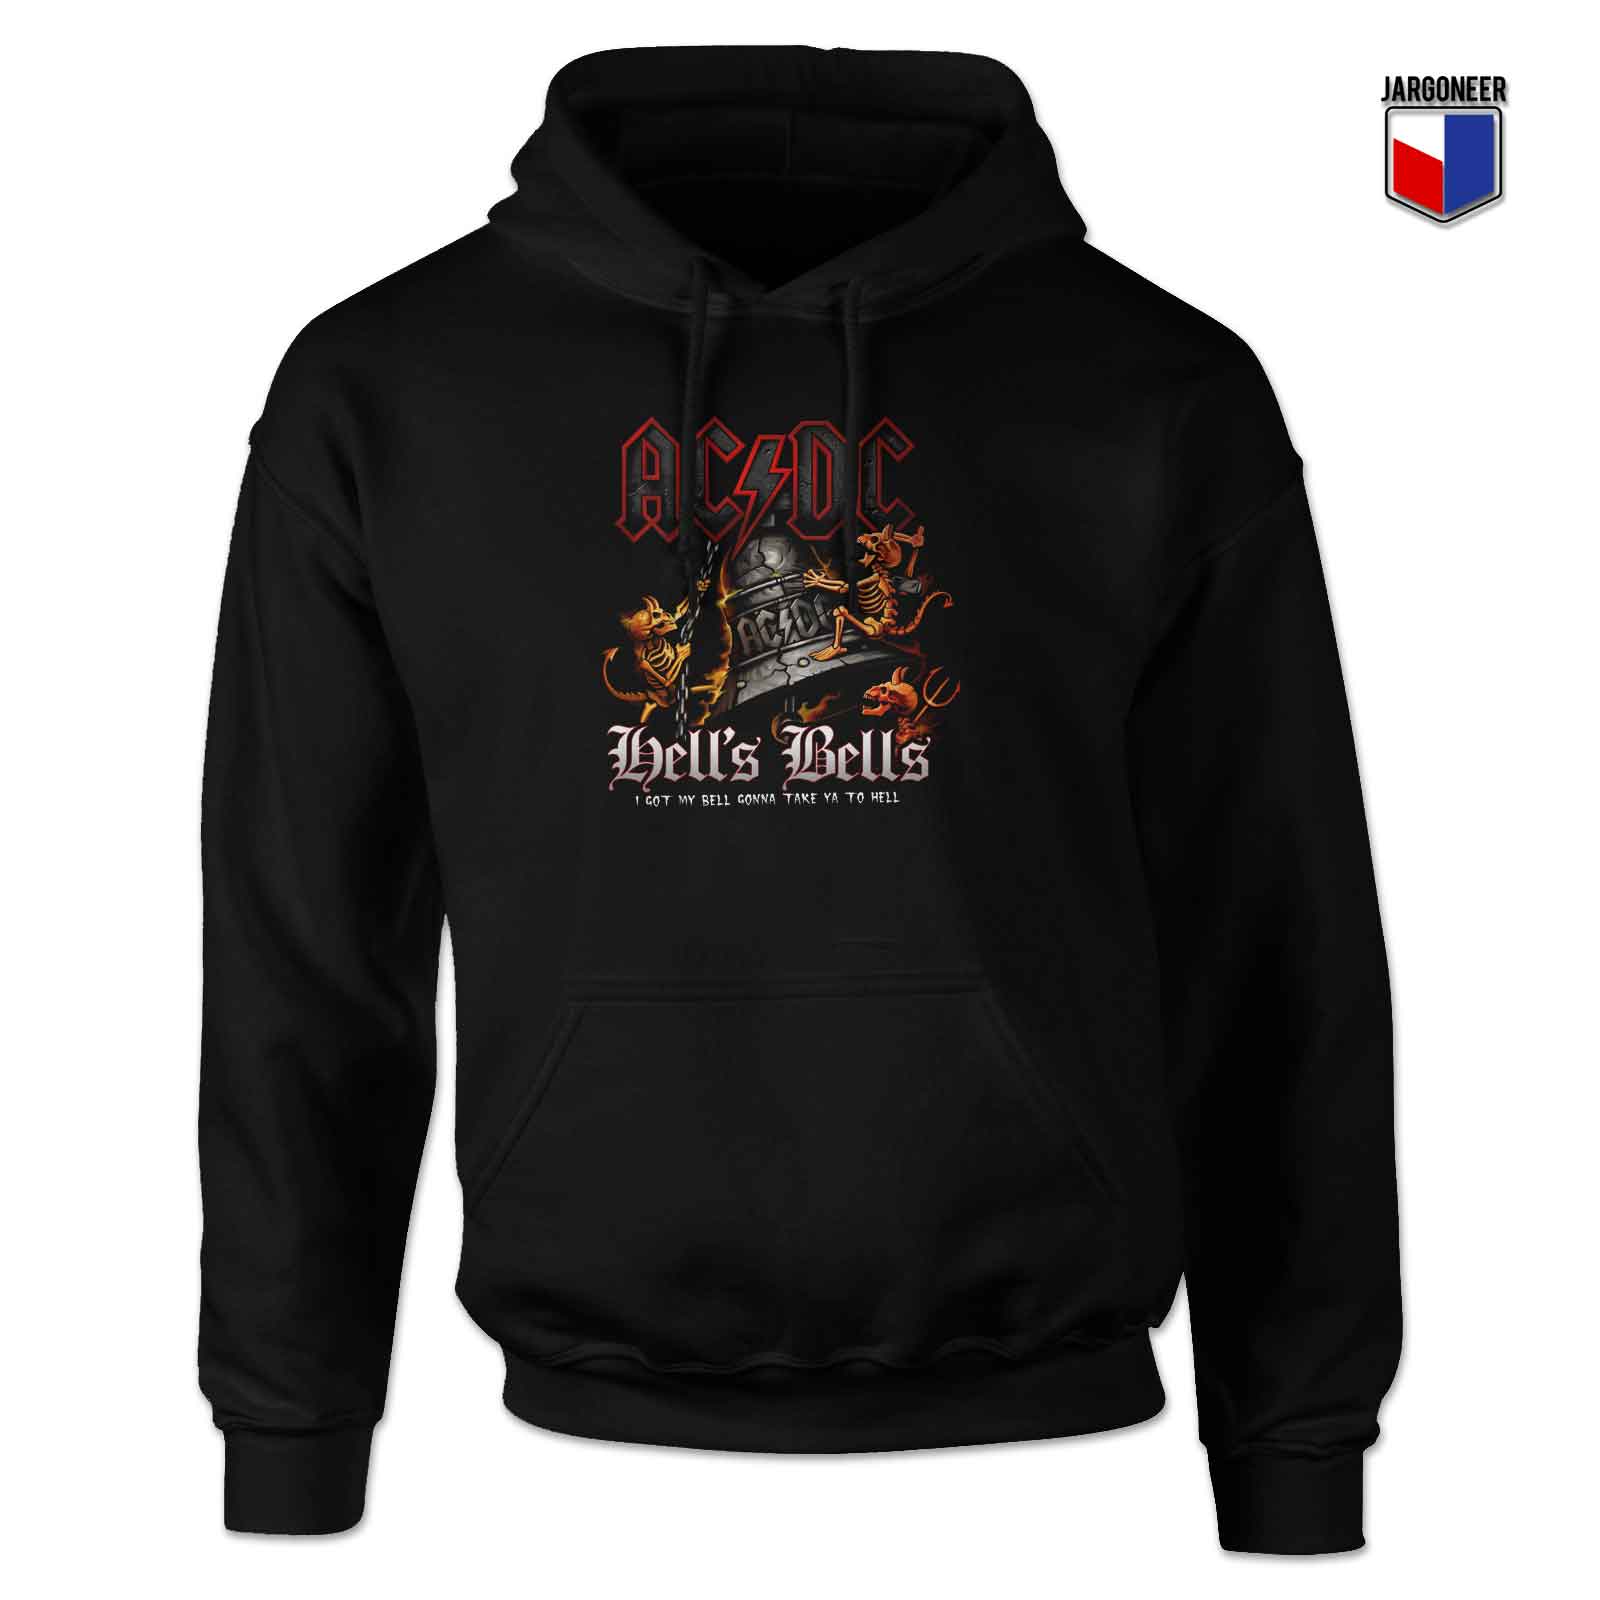 ACDC Hells Bells 3 - Shop Unique Graphic Cool Shirt Designs